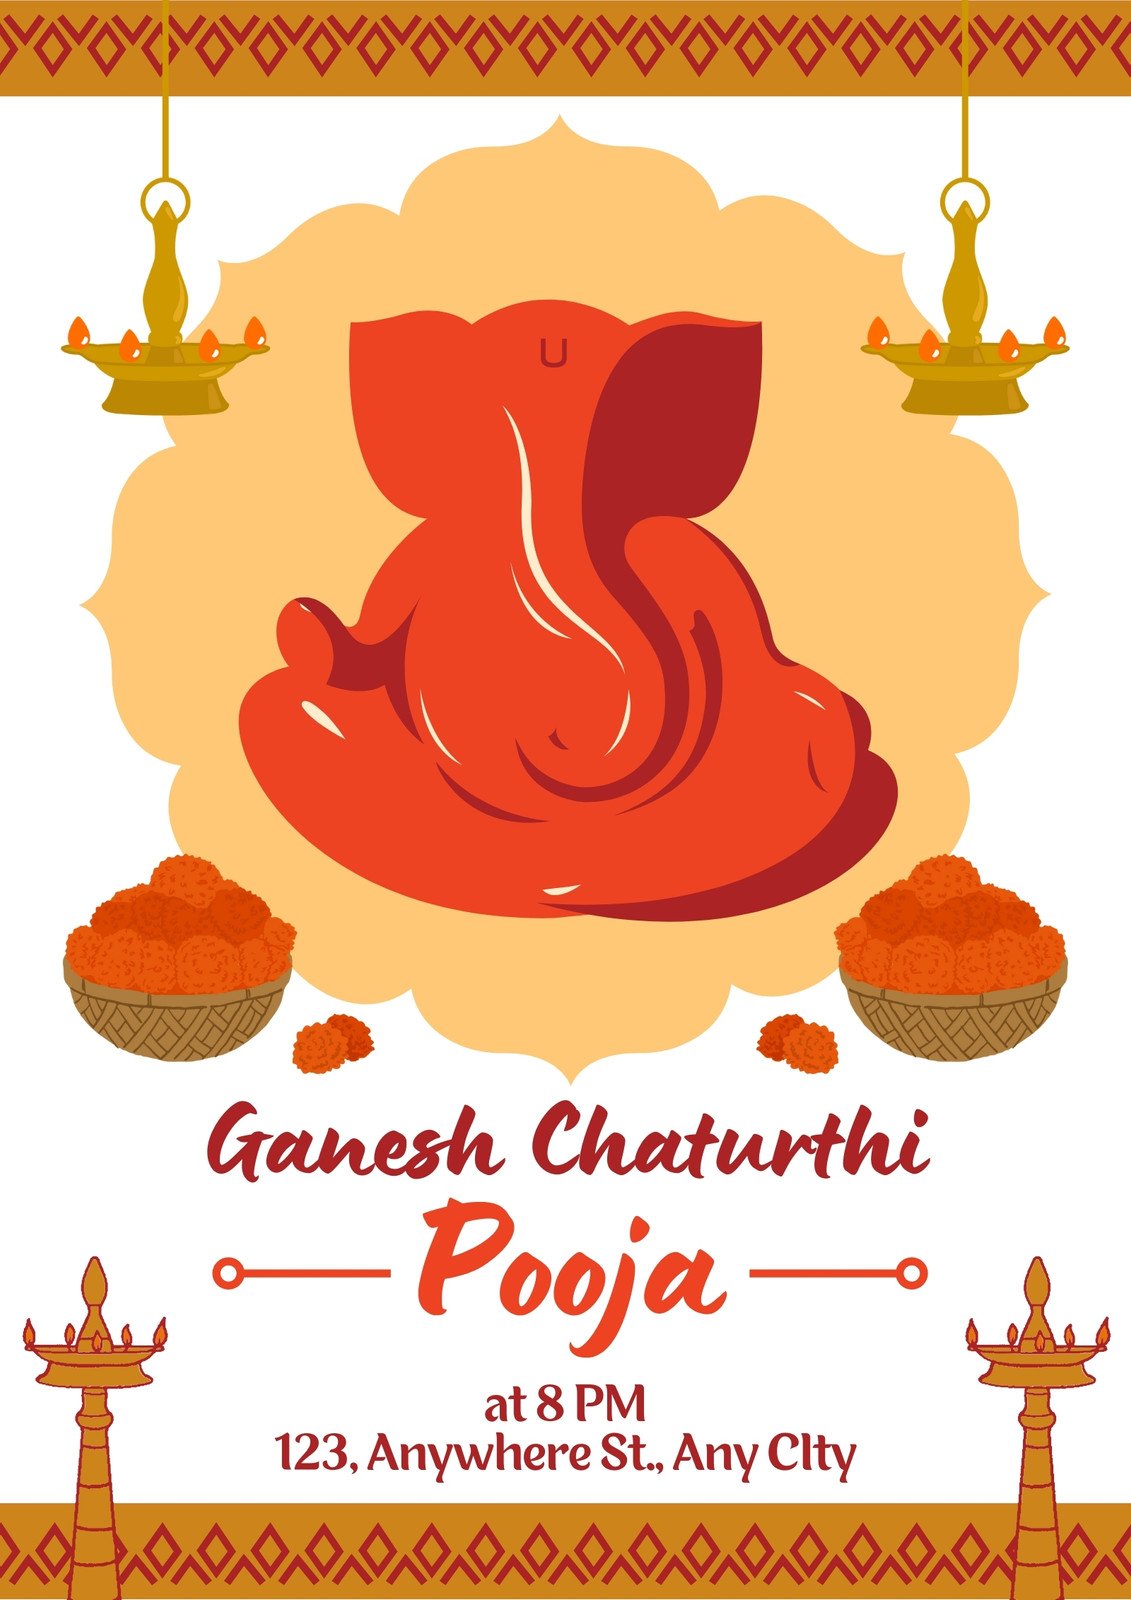 Orange and Red Illustrative Ganesh Chaturthi Poster